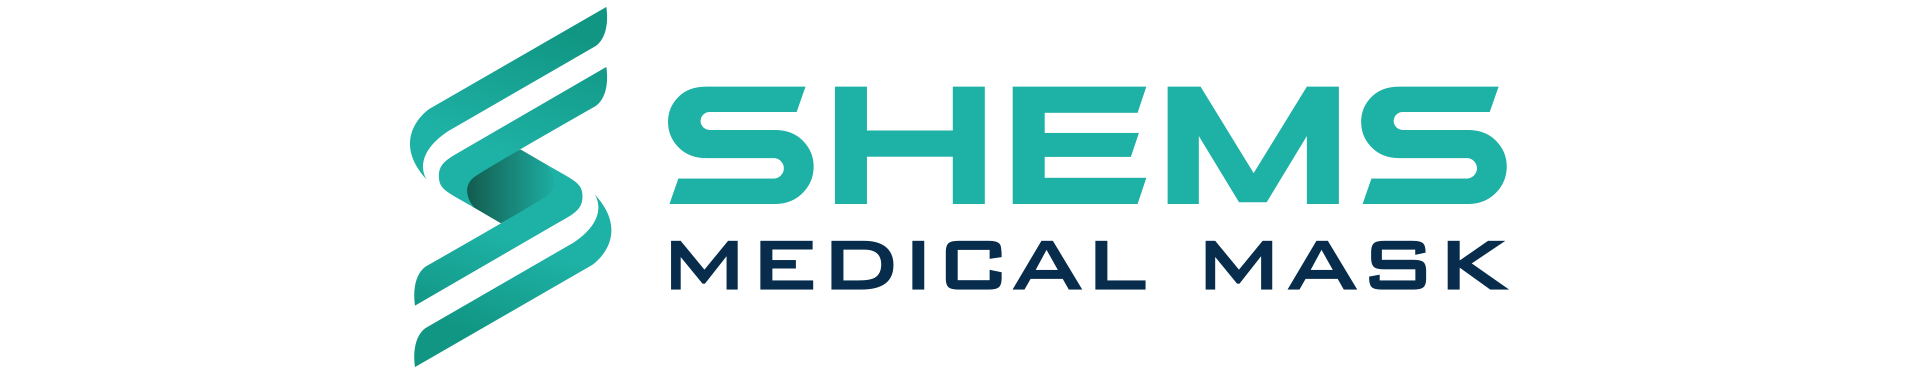 Shems Medical